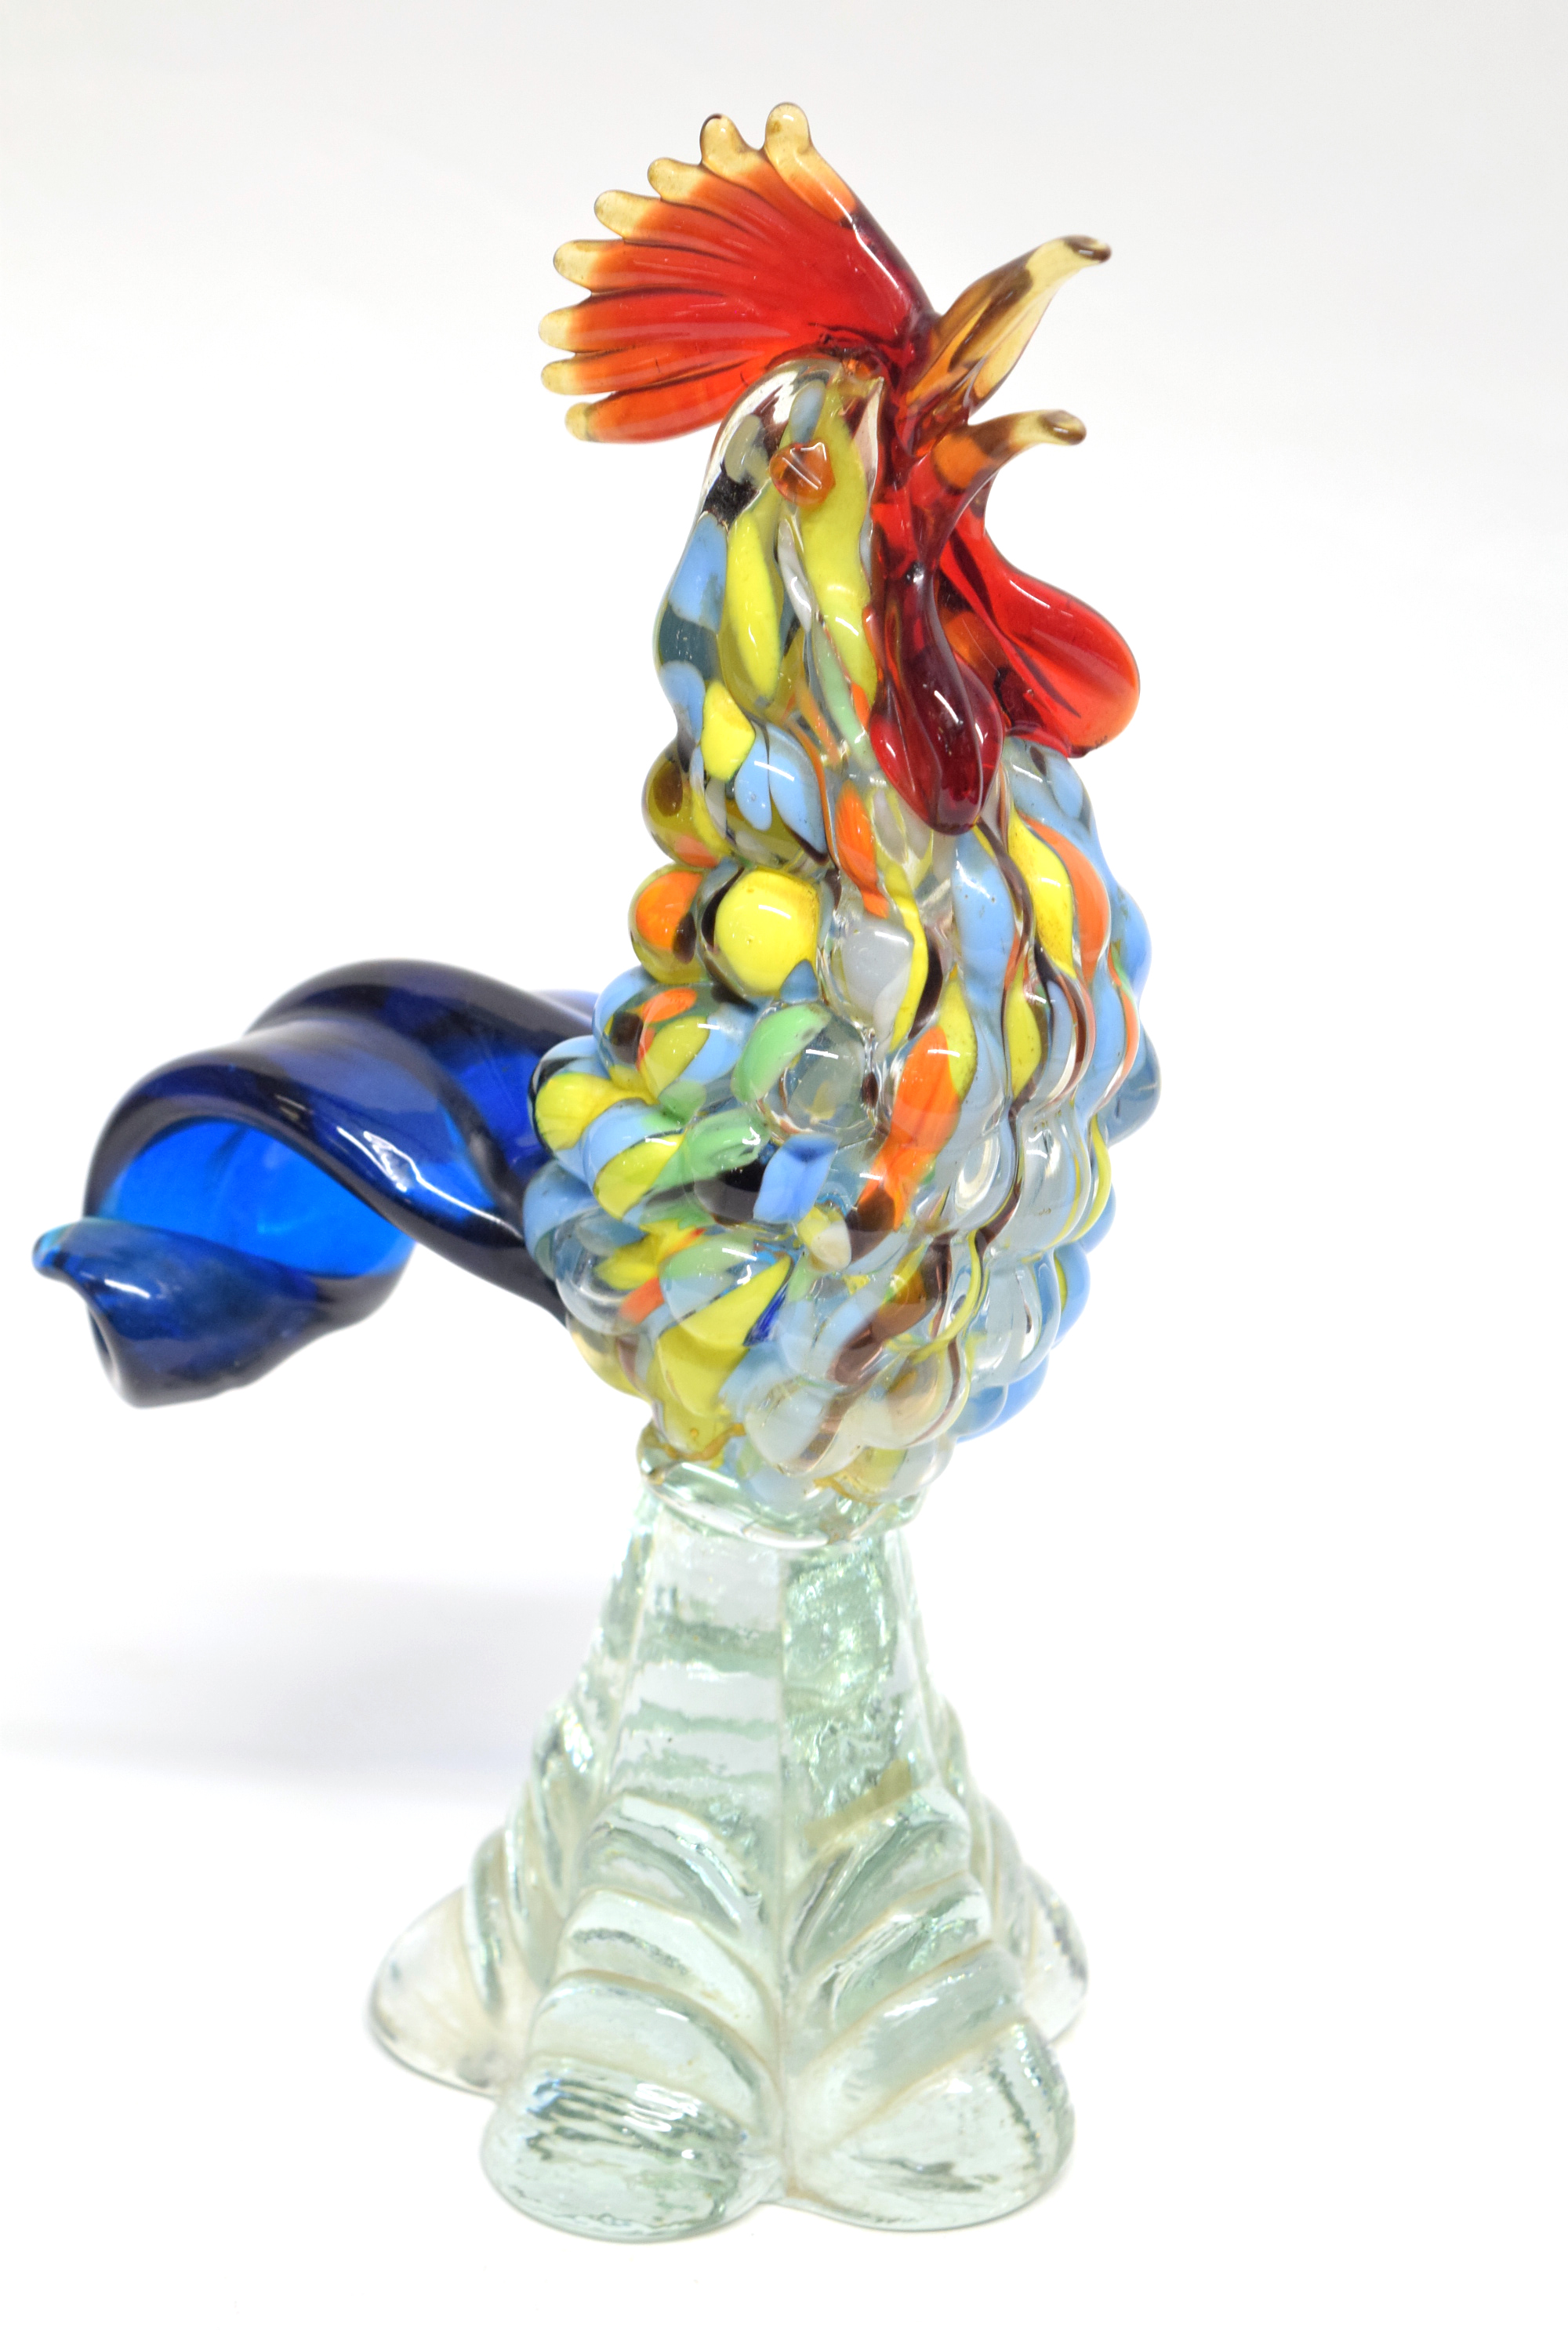 Murano glass model of a cockerel, 24cm high - Image 3 of 3